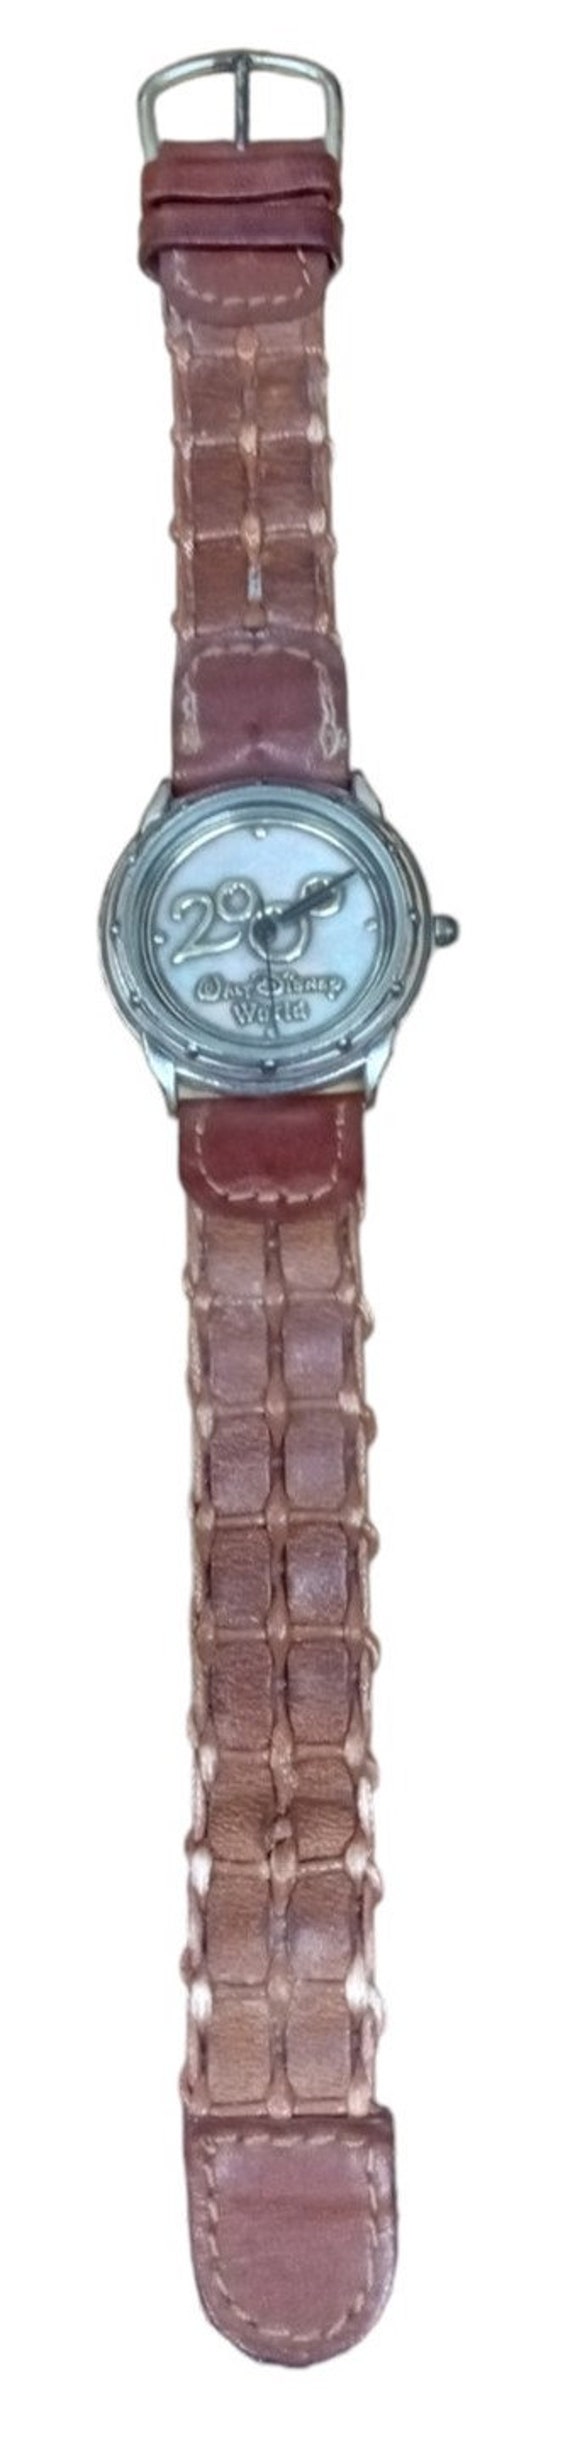 Walt Disney World Y2K Wristwatch Vintage Collectib